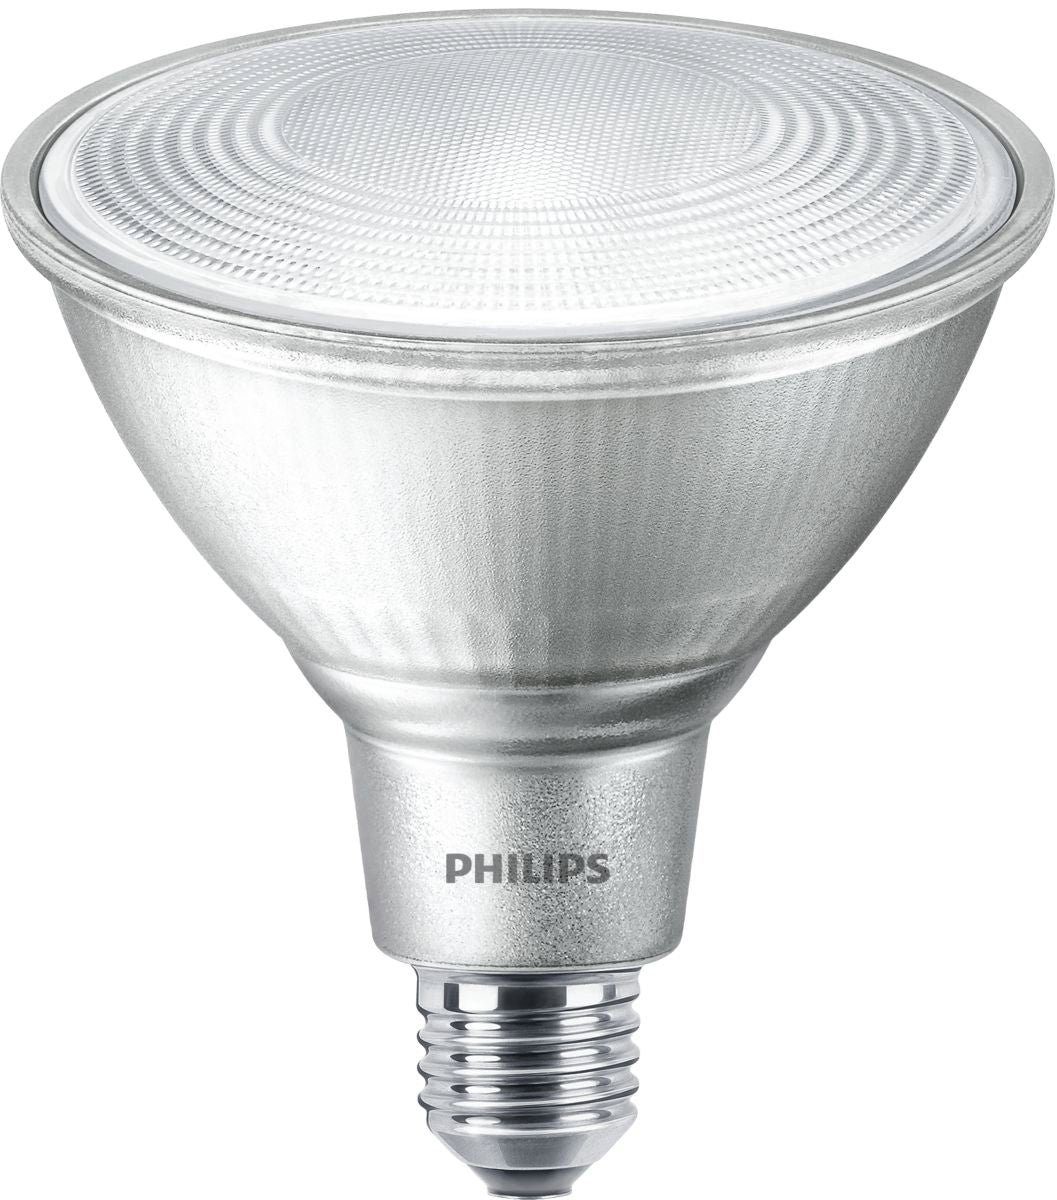 Reflektor Lighting warmweiß LED-Leuchtmittel LED Philips (2700 Lumen, E27, Kelvin), 750 ersetzt 60W,